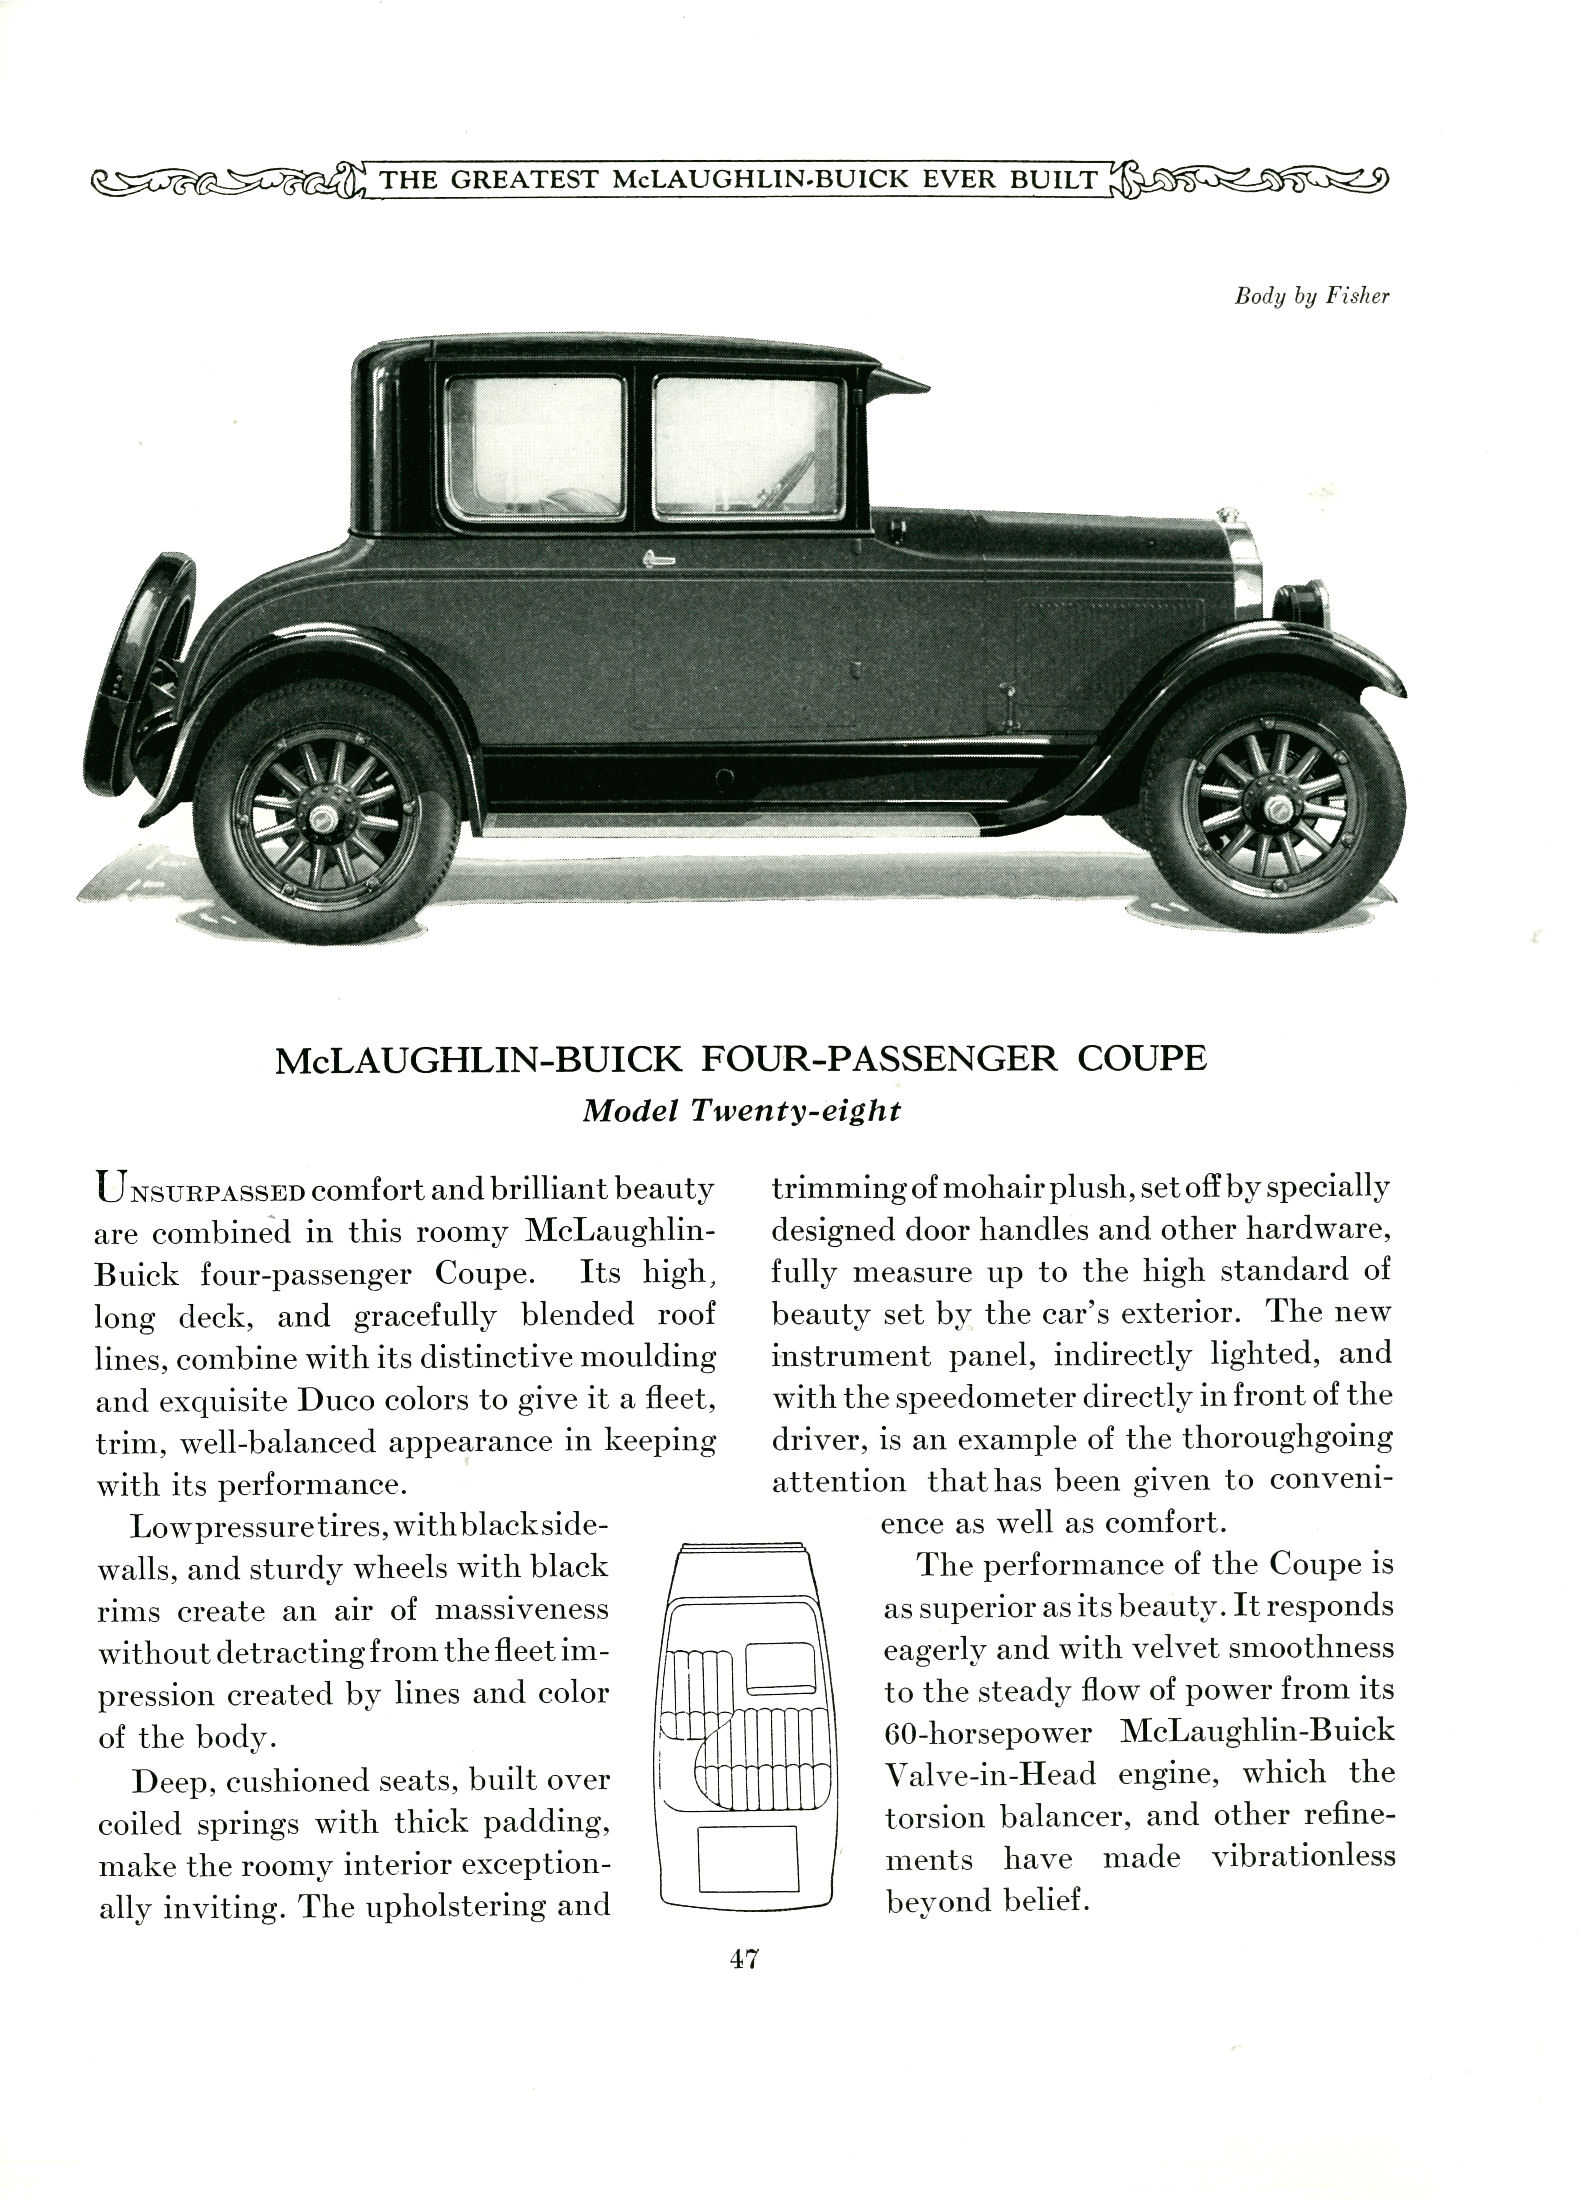 1930 McLaughlin Buick Booklet-47